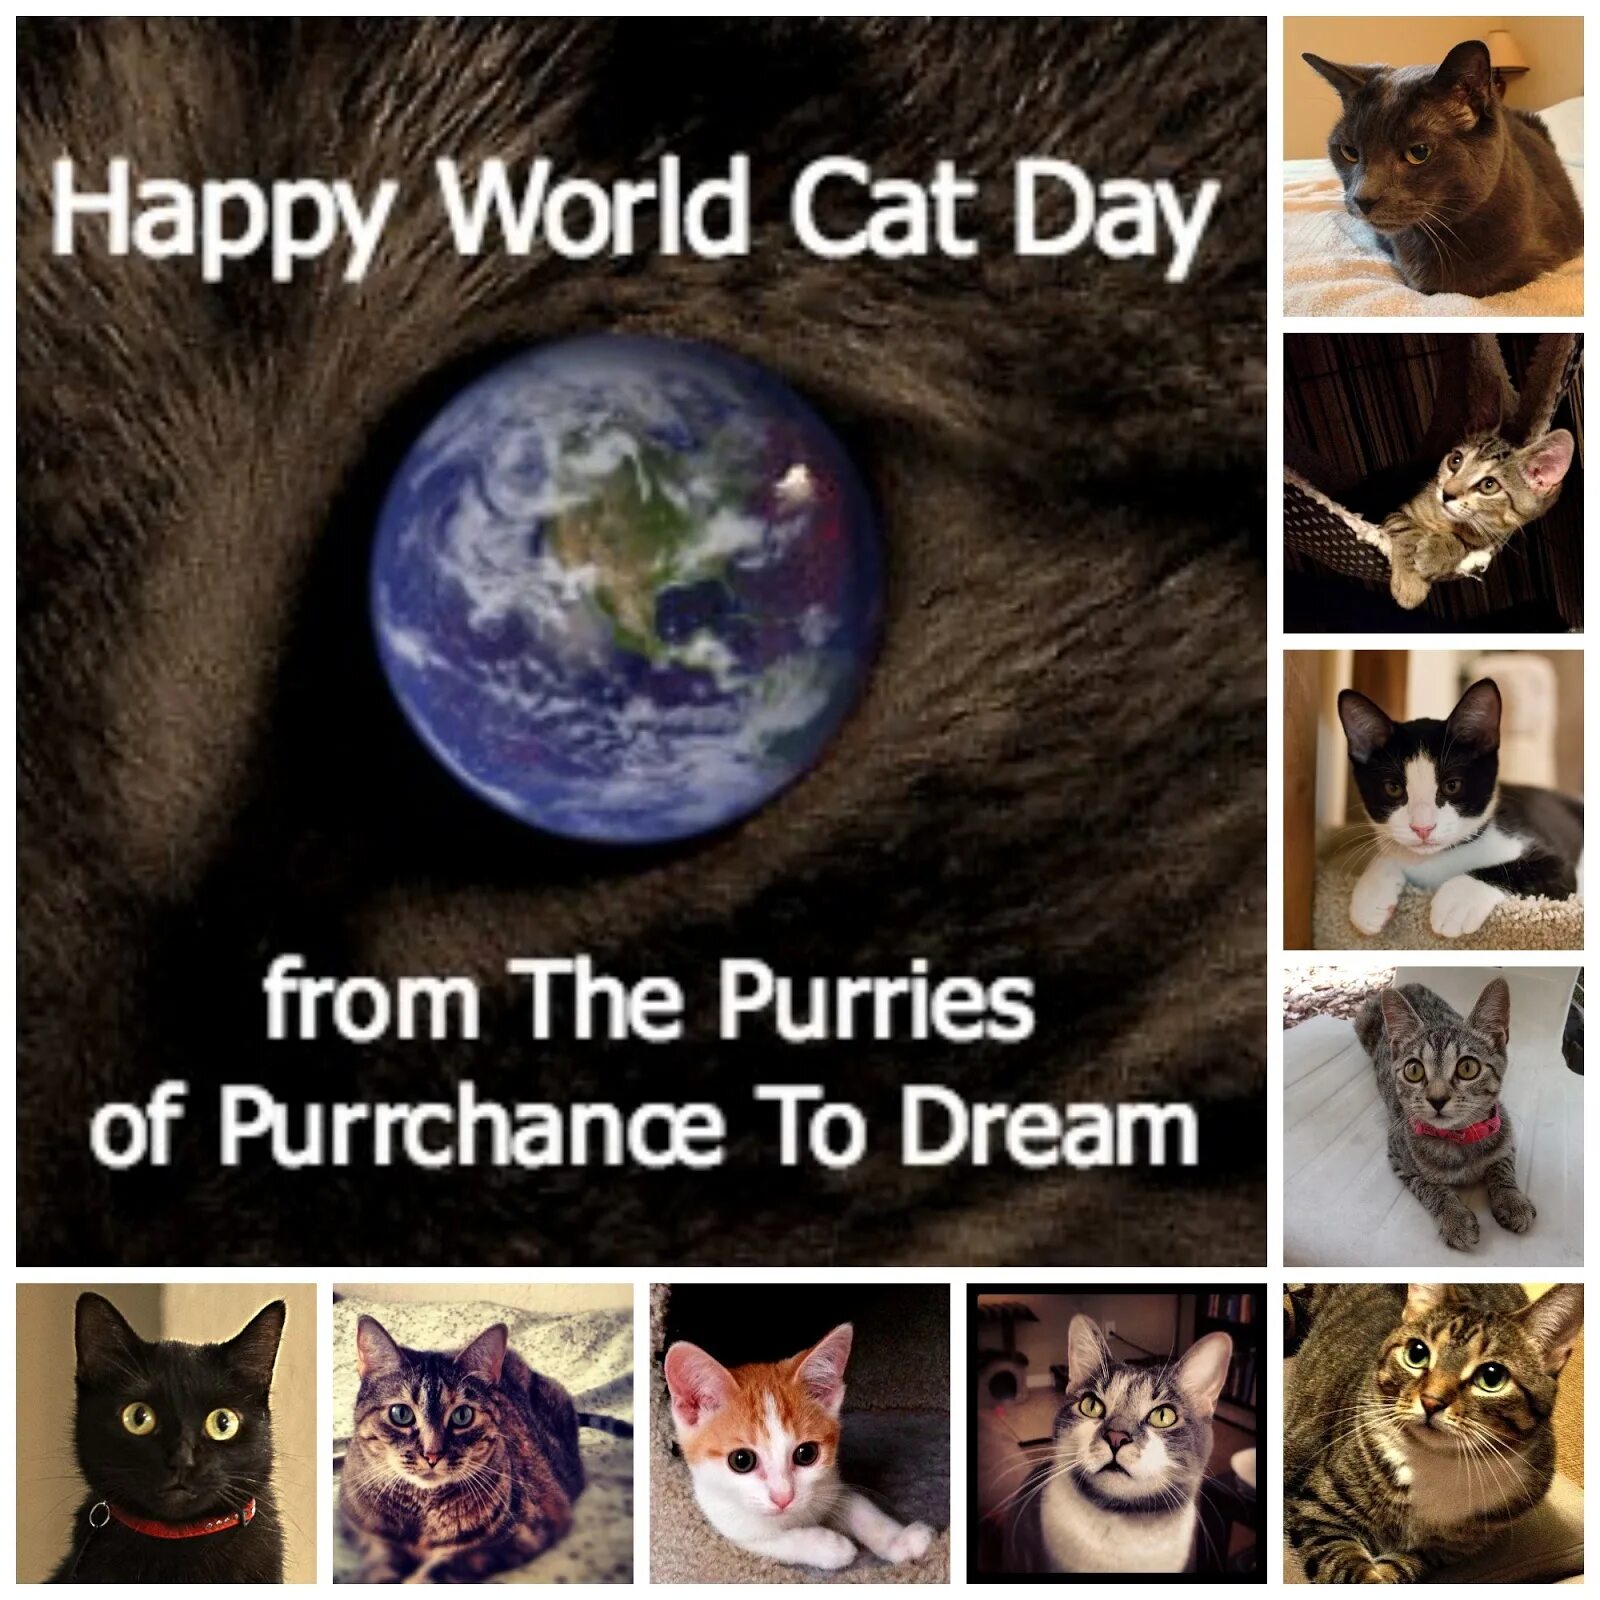 Happy World Cat Day. Happy International Cat Day. Европейский день кота (Cat Day in Europe). Cats Day in World.